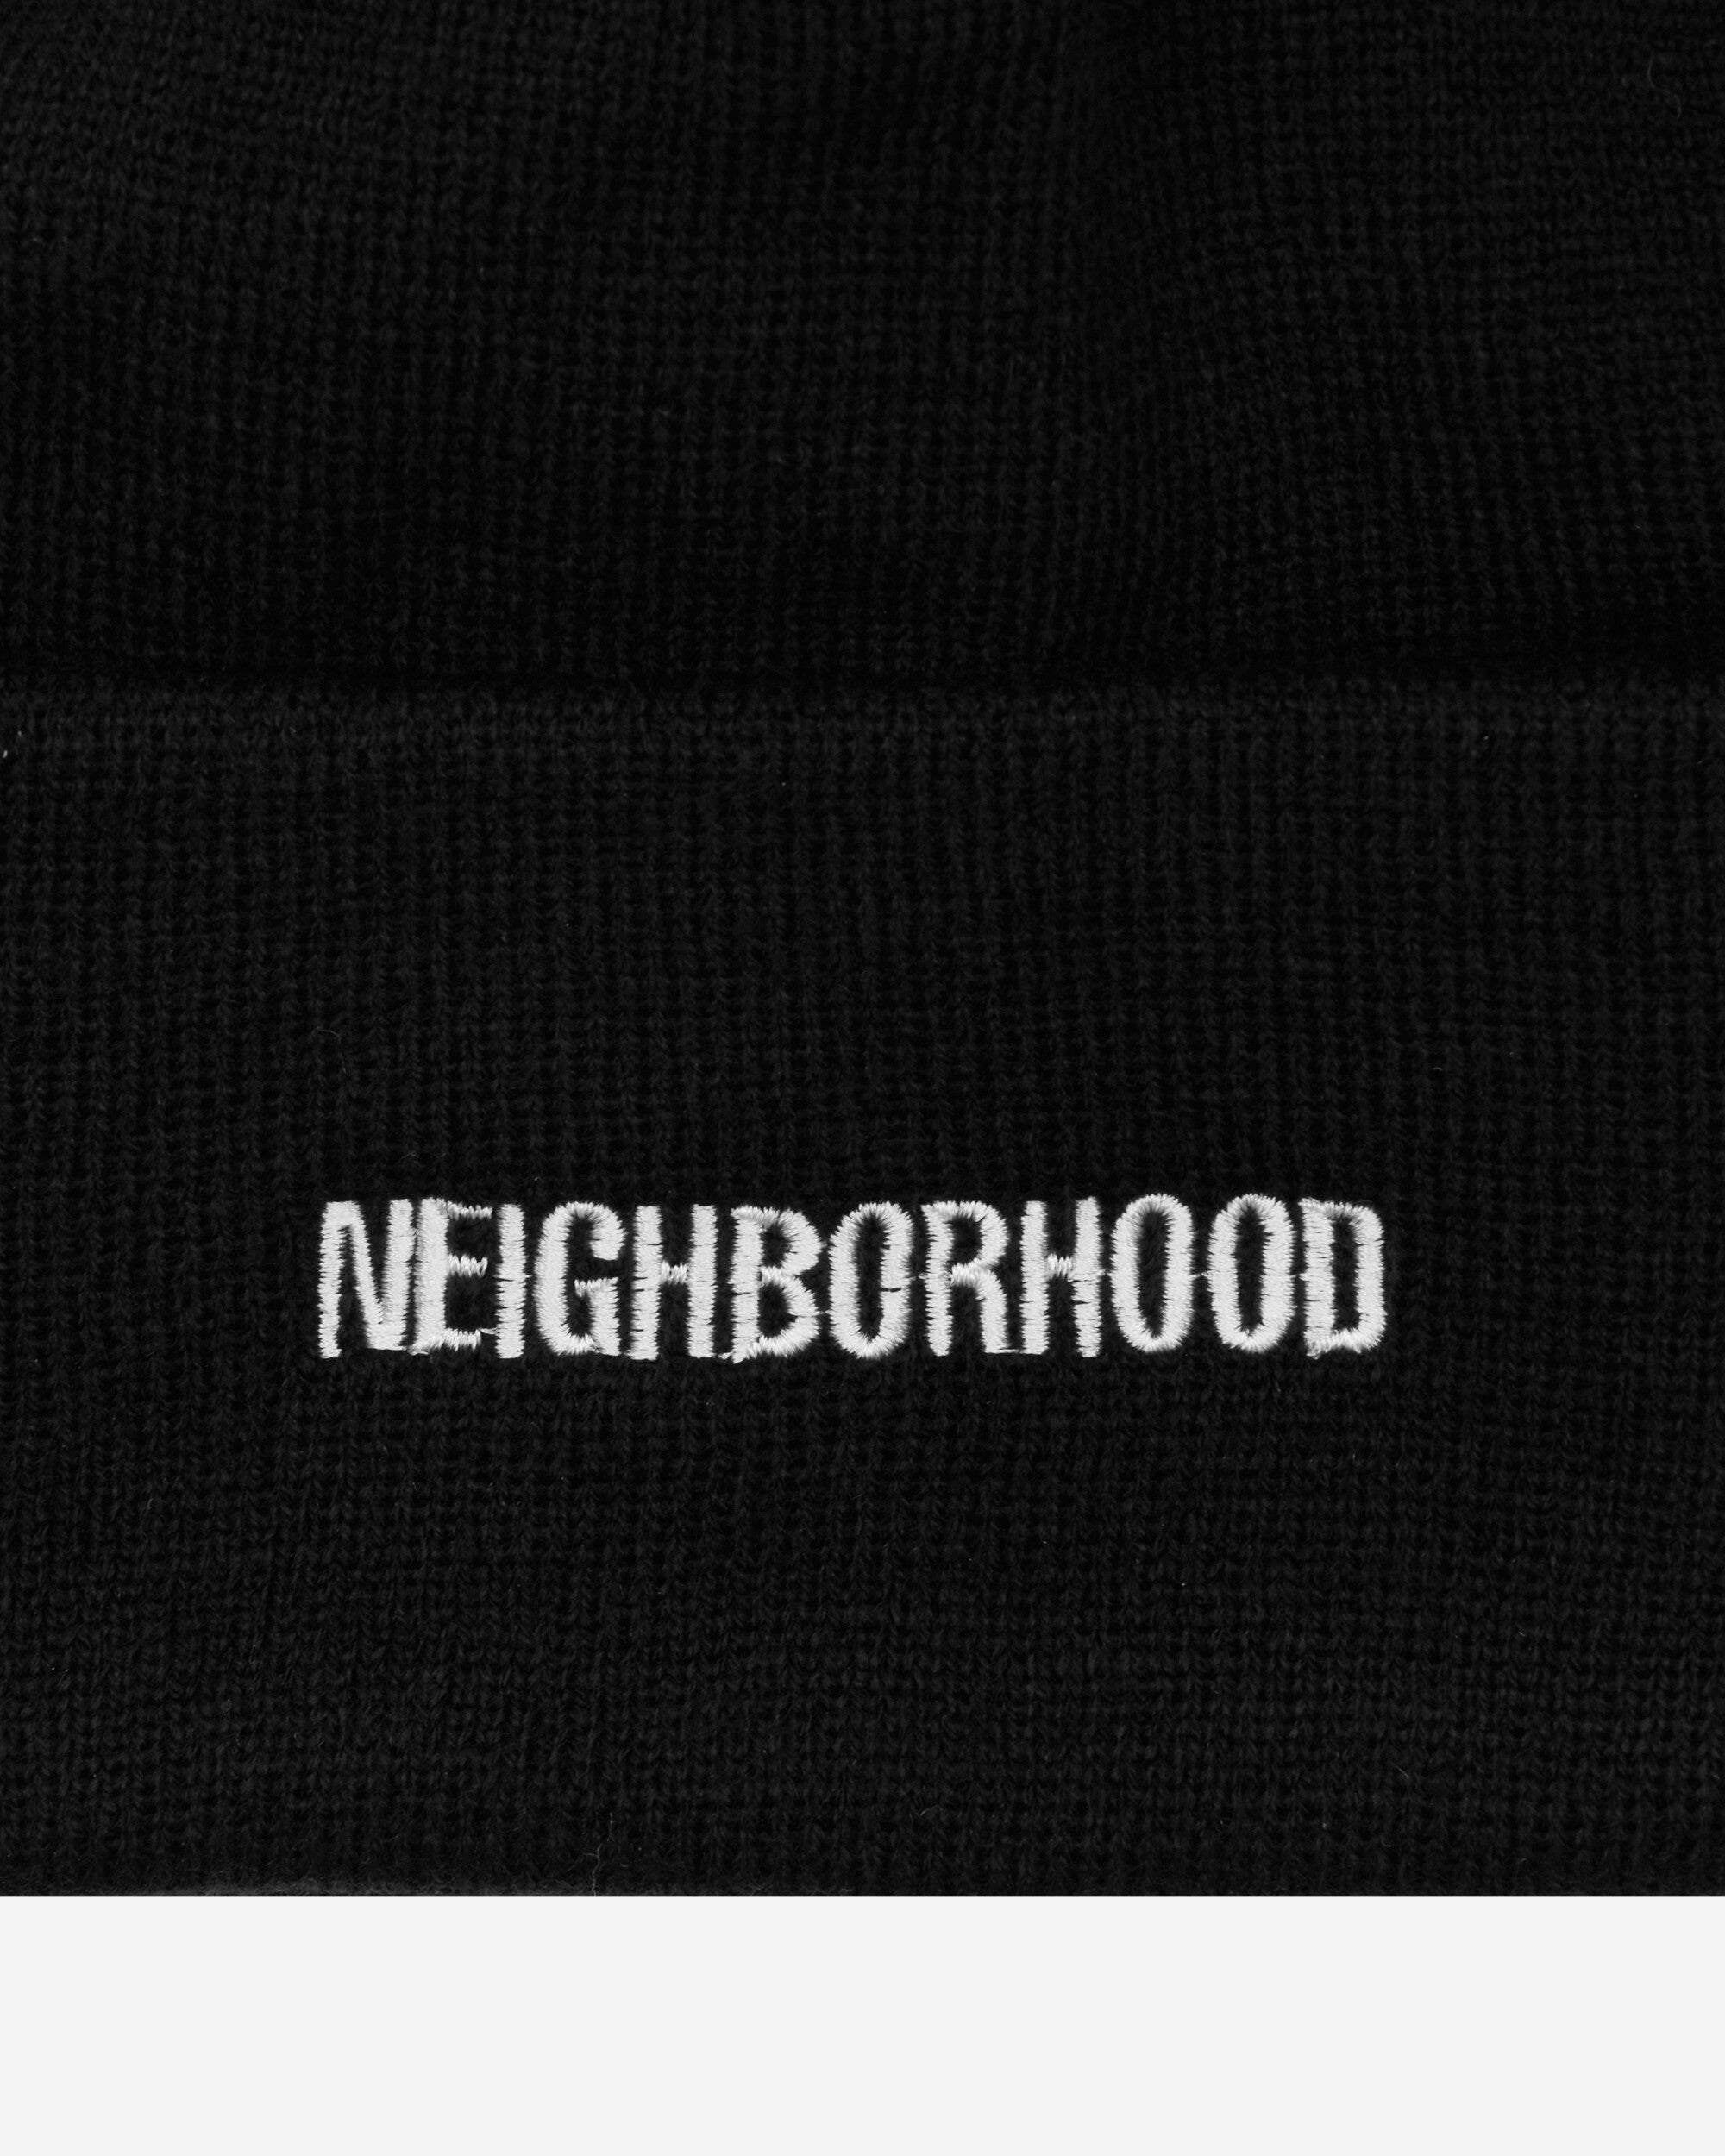 Neighborhood Ci Embroidery Beanie Black Hats Beanies 241YGNH-HT02S BK